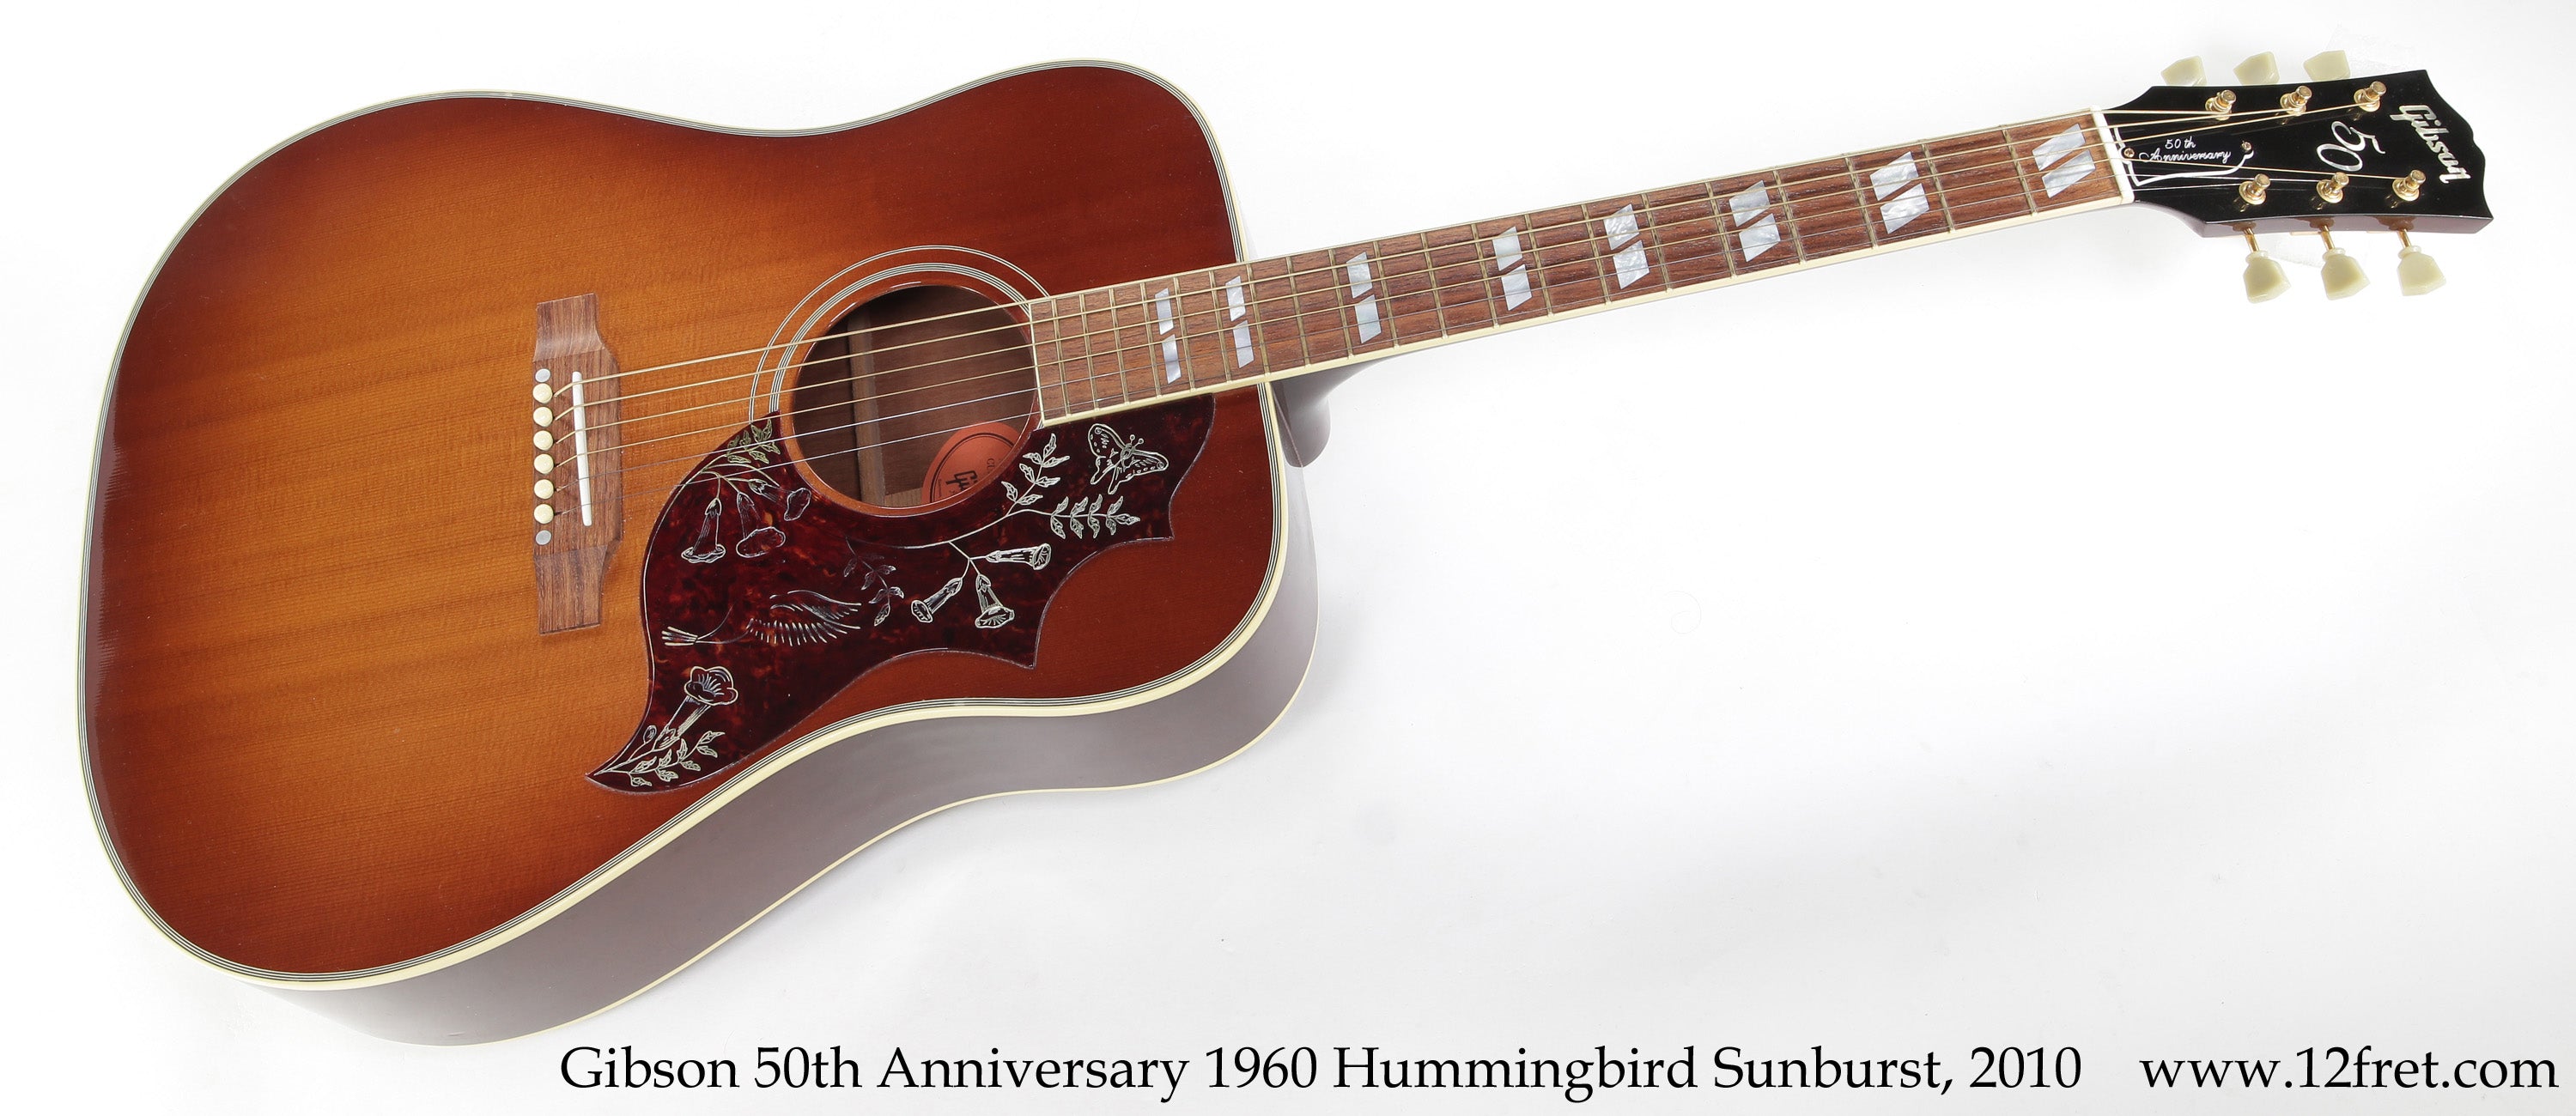 Gibson 50th Anniversary 1960 Hummingbird Sunburst, 2010  - The Twelfth Fret